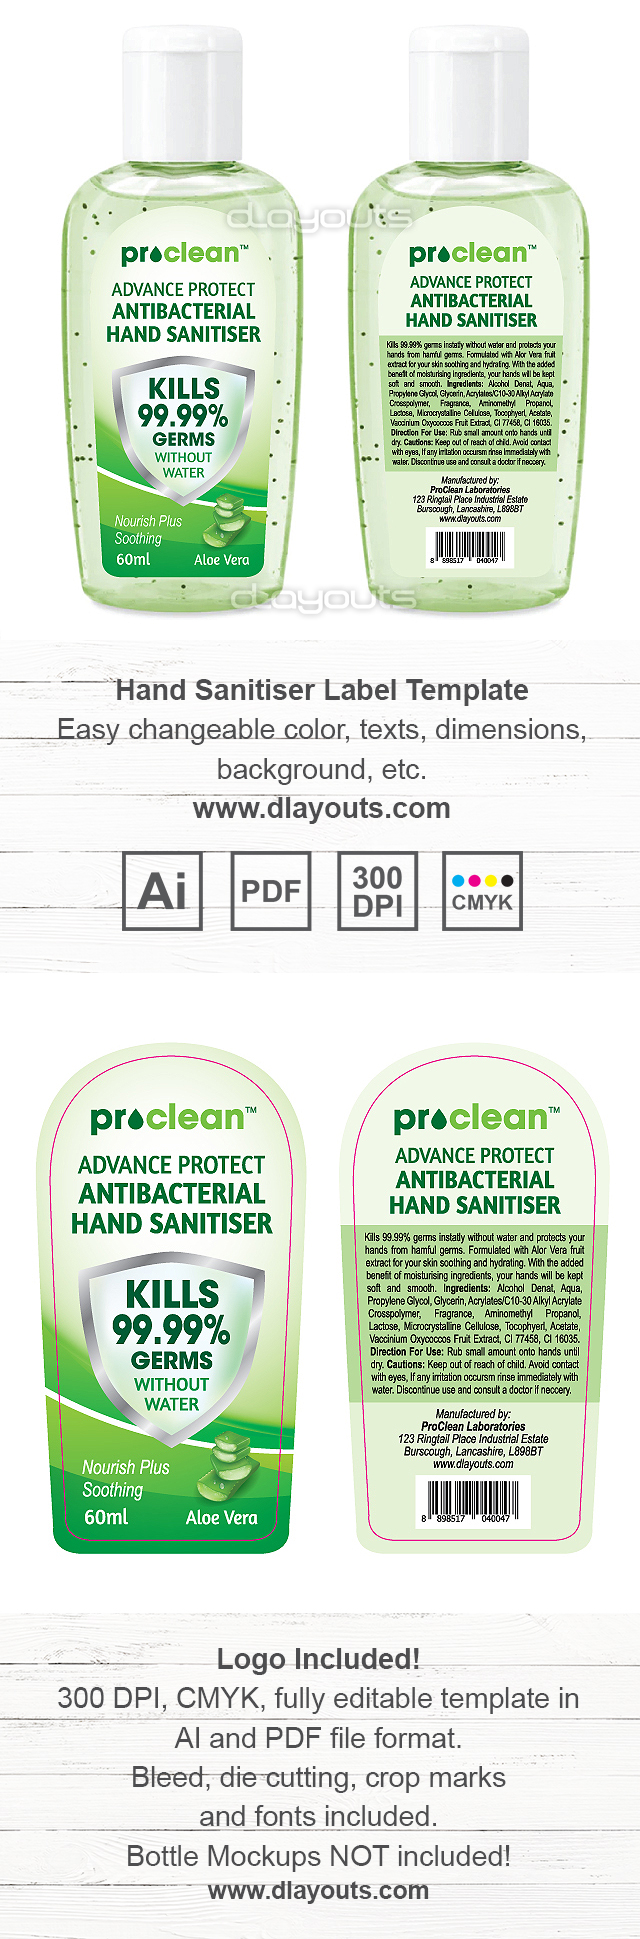 Hand Sanitizer Label Template